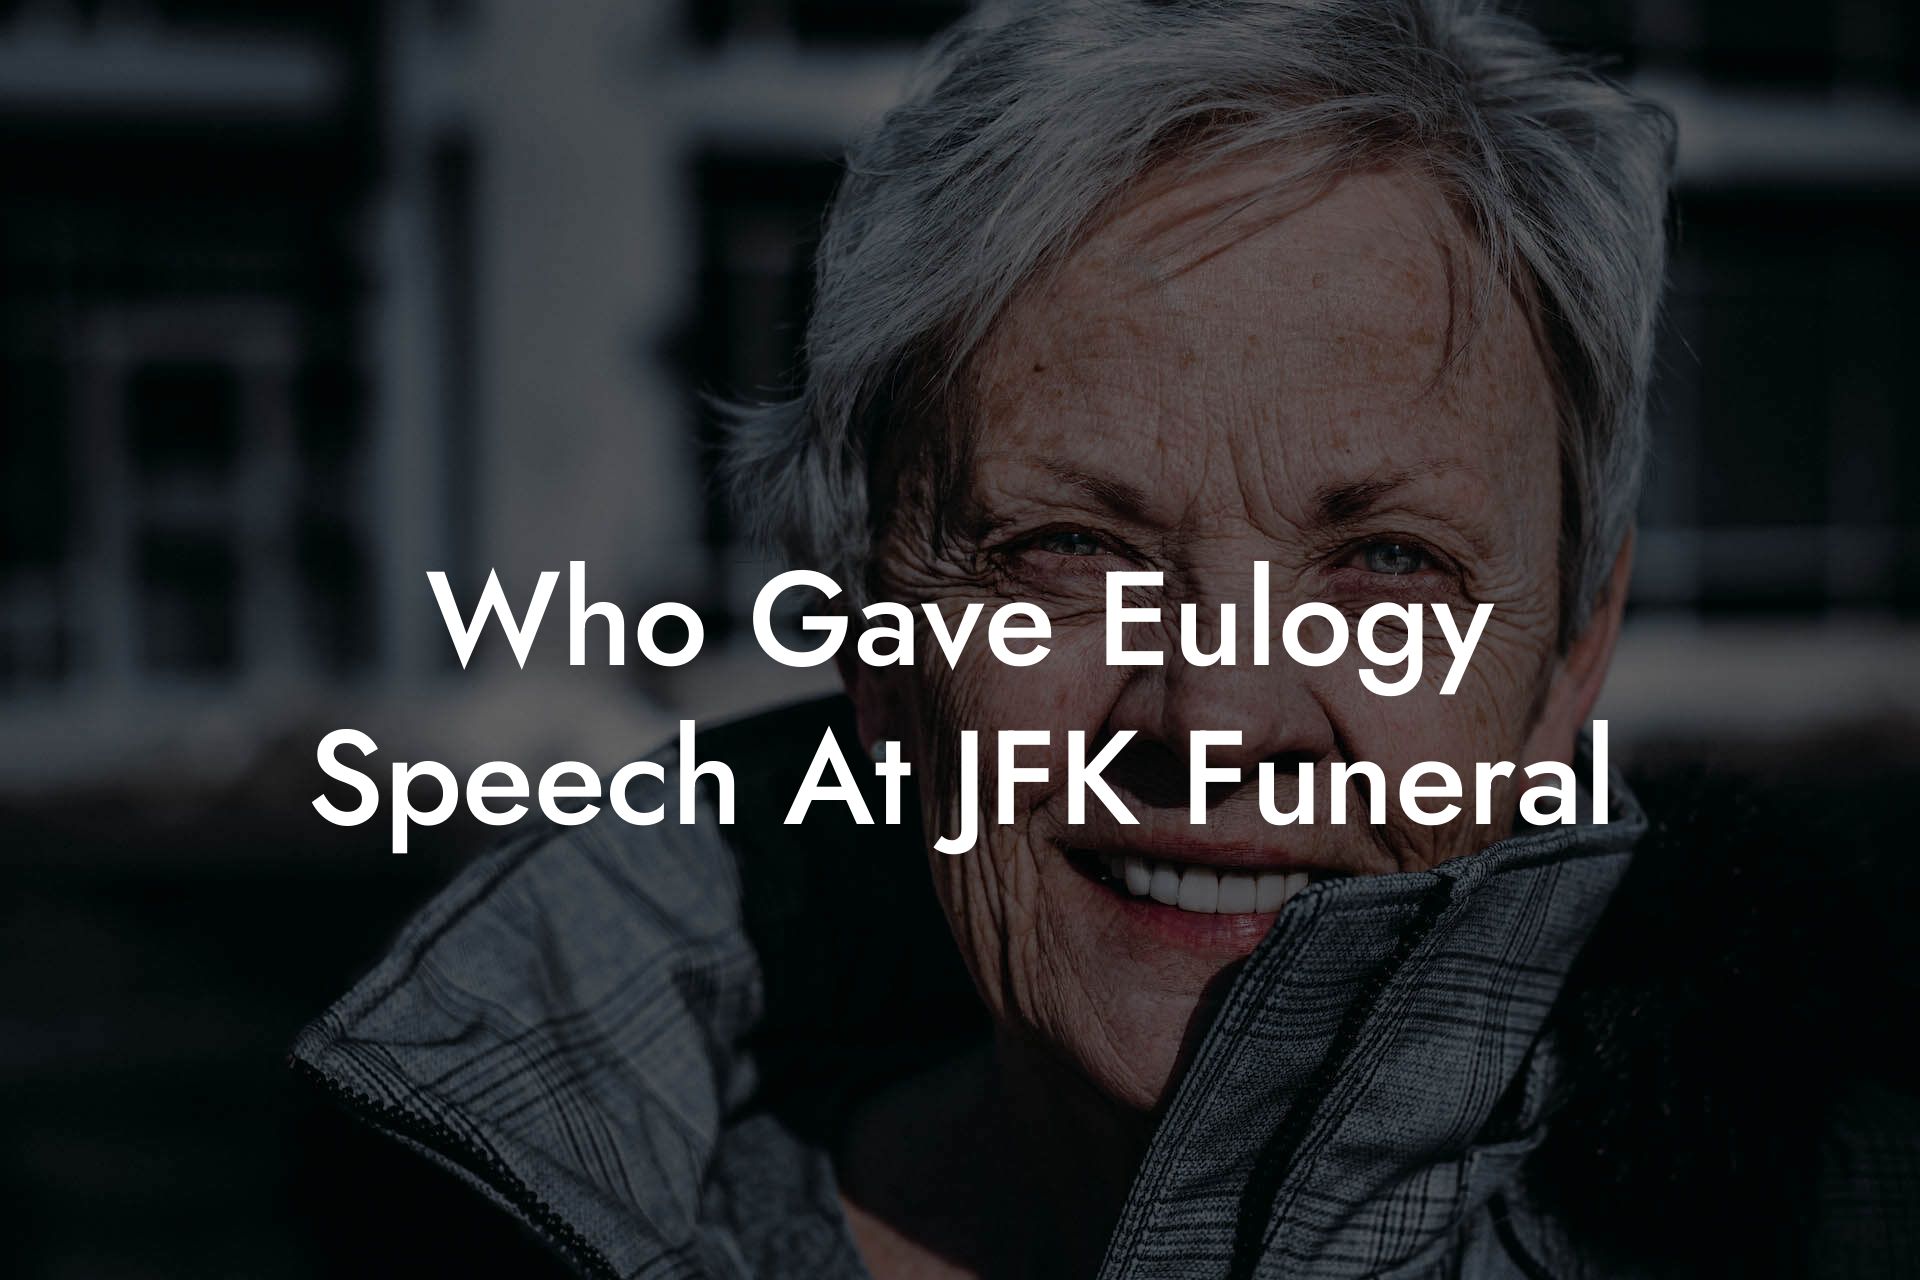 Who Gave Eulogy Speech At JFK Funeral